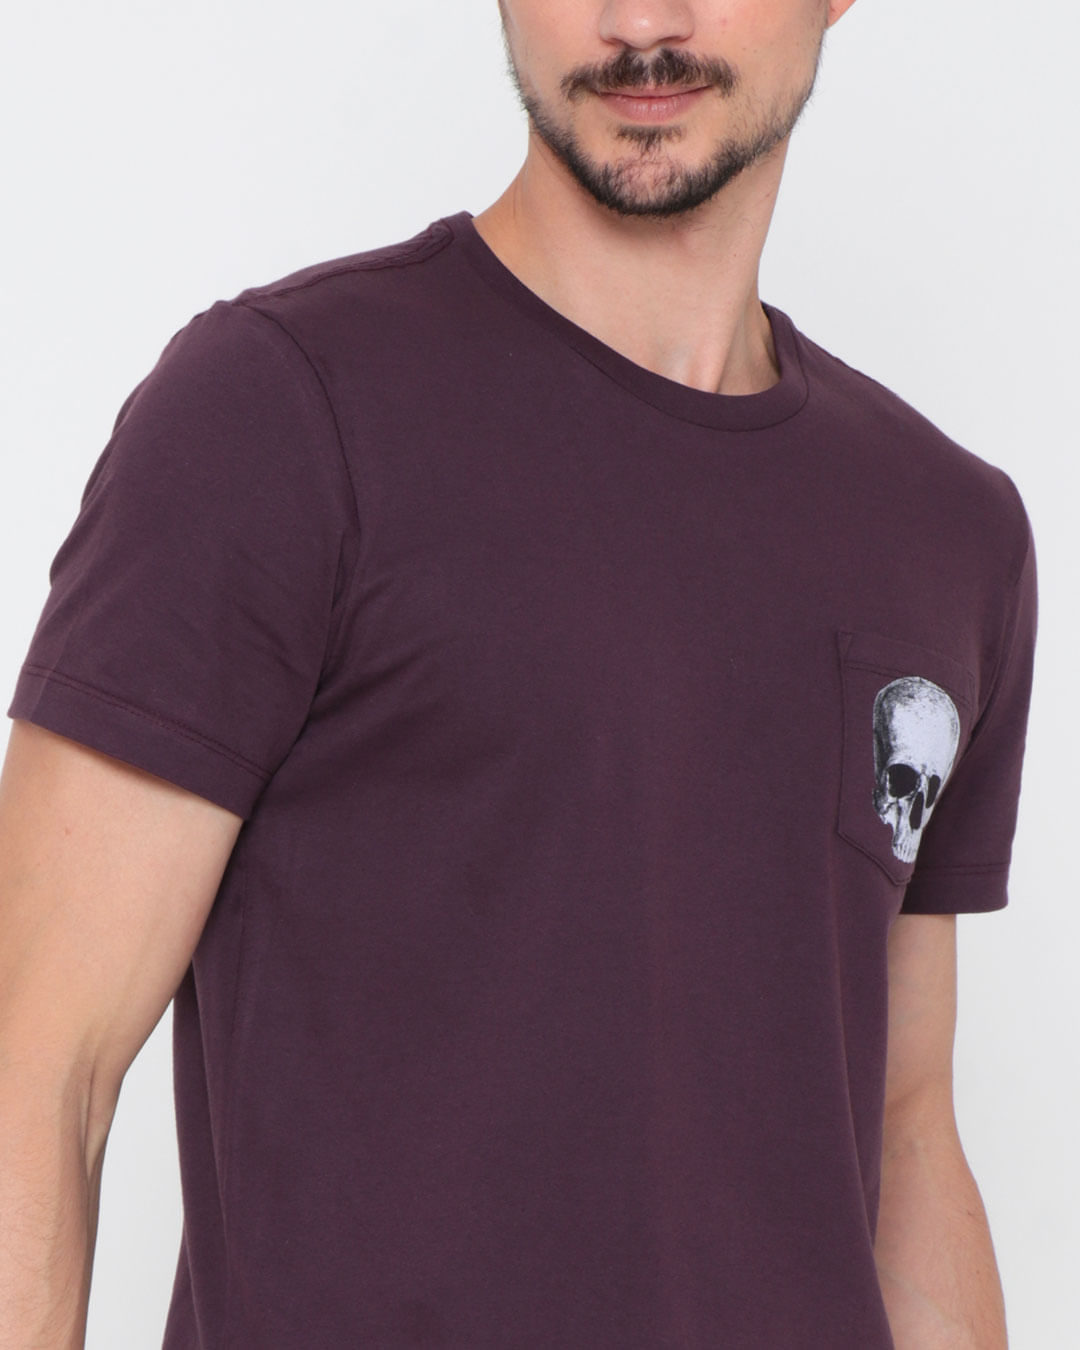 Camiseta-Masculina-Manga-Curta-Bolso-Caveira-Vinho